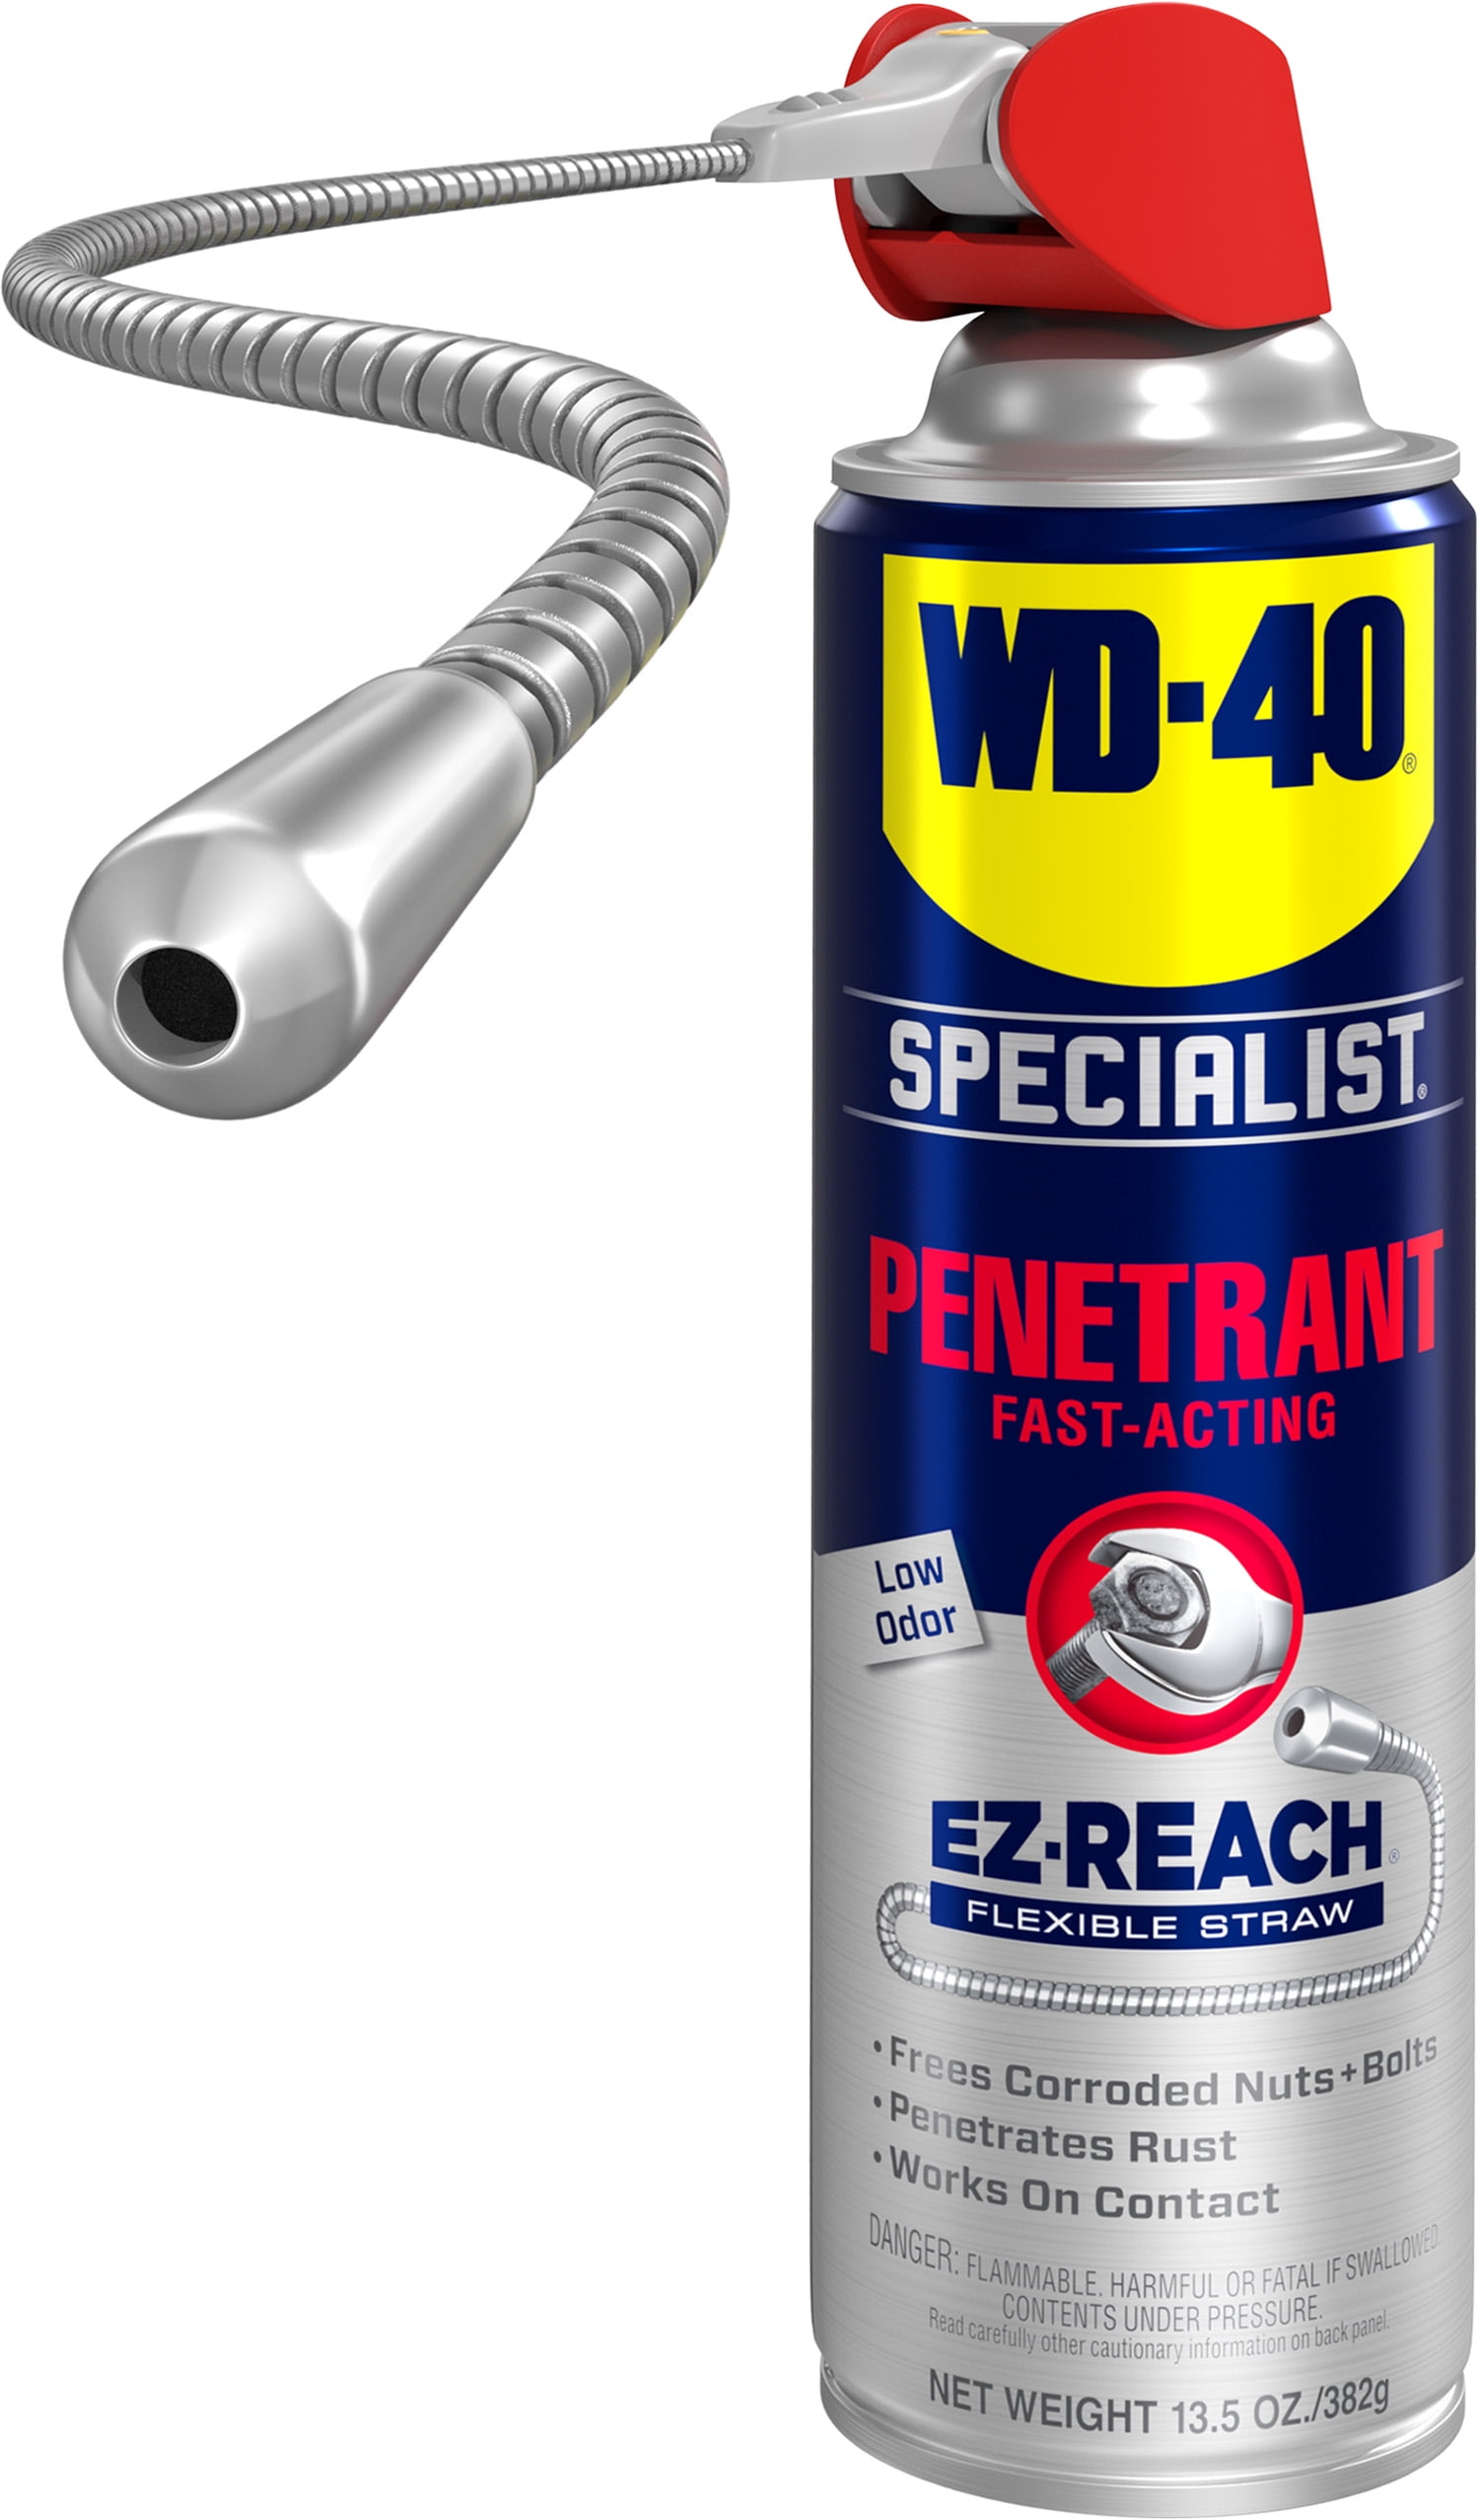 WD-40 Specialist Penetrant with EZ-REACH, 13.5 oz.